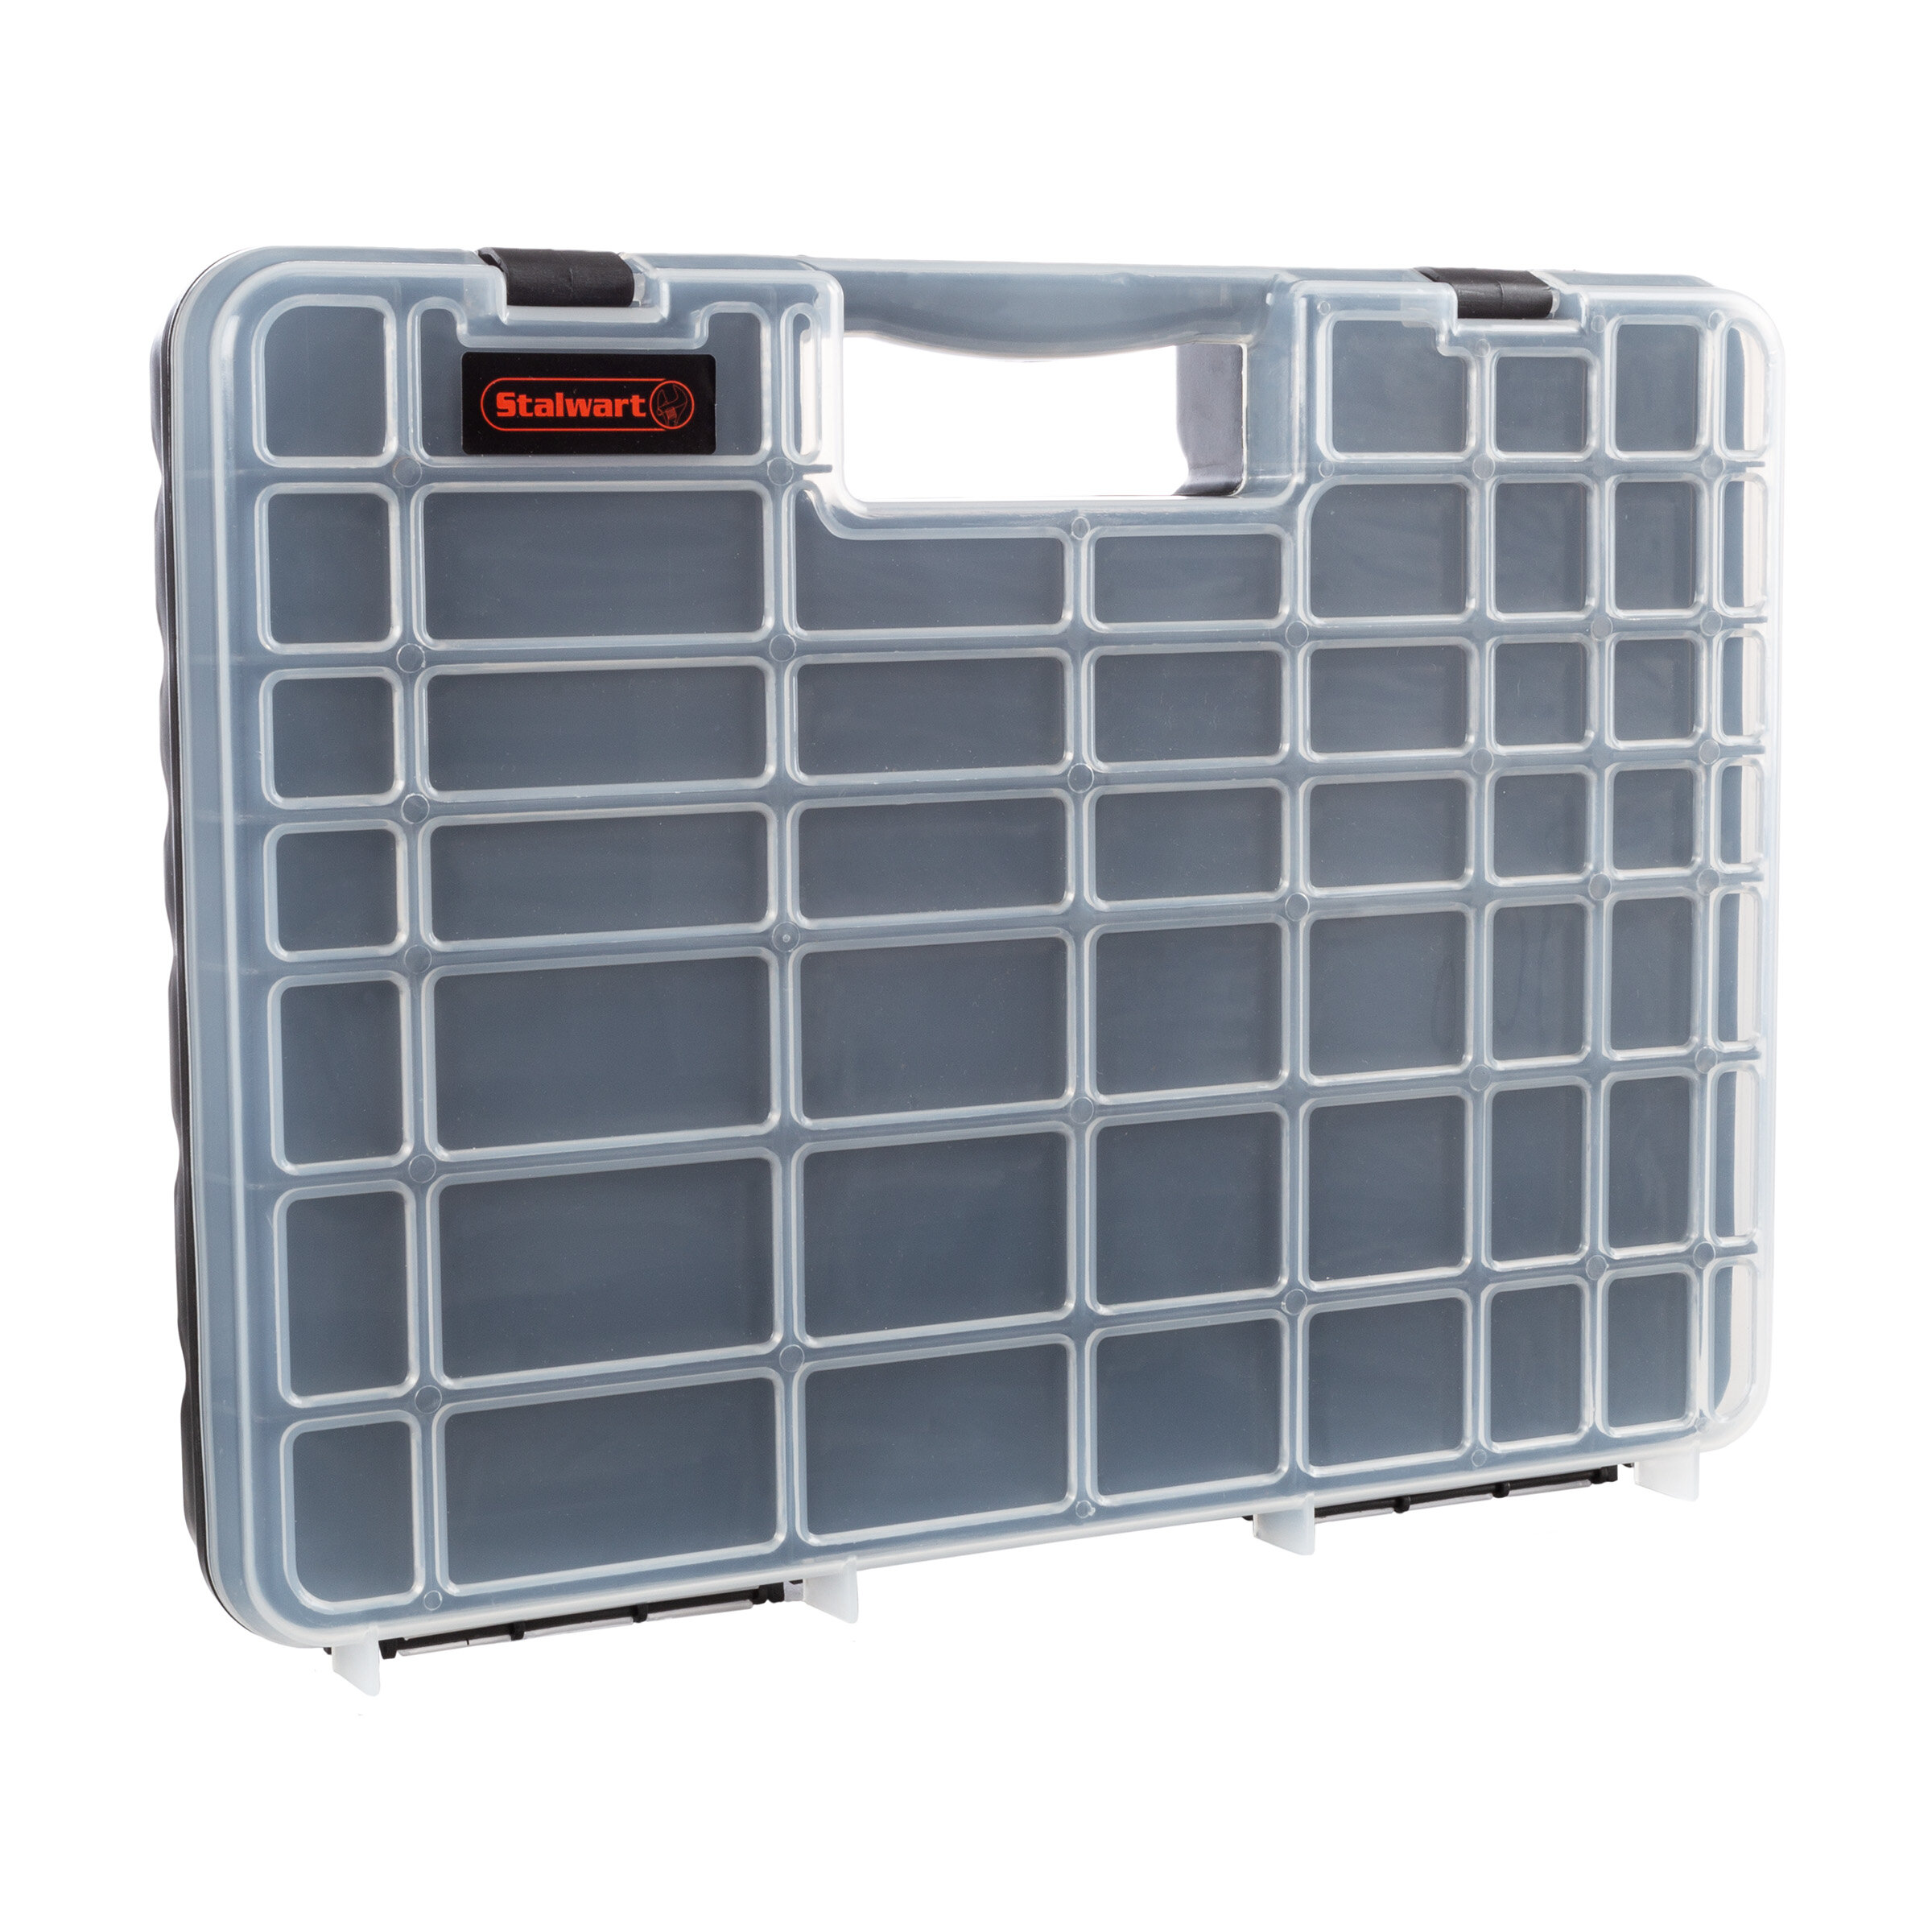 Stalwart Storage Drawers-24 Compartment Organizer Desktop or Wall Mount C